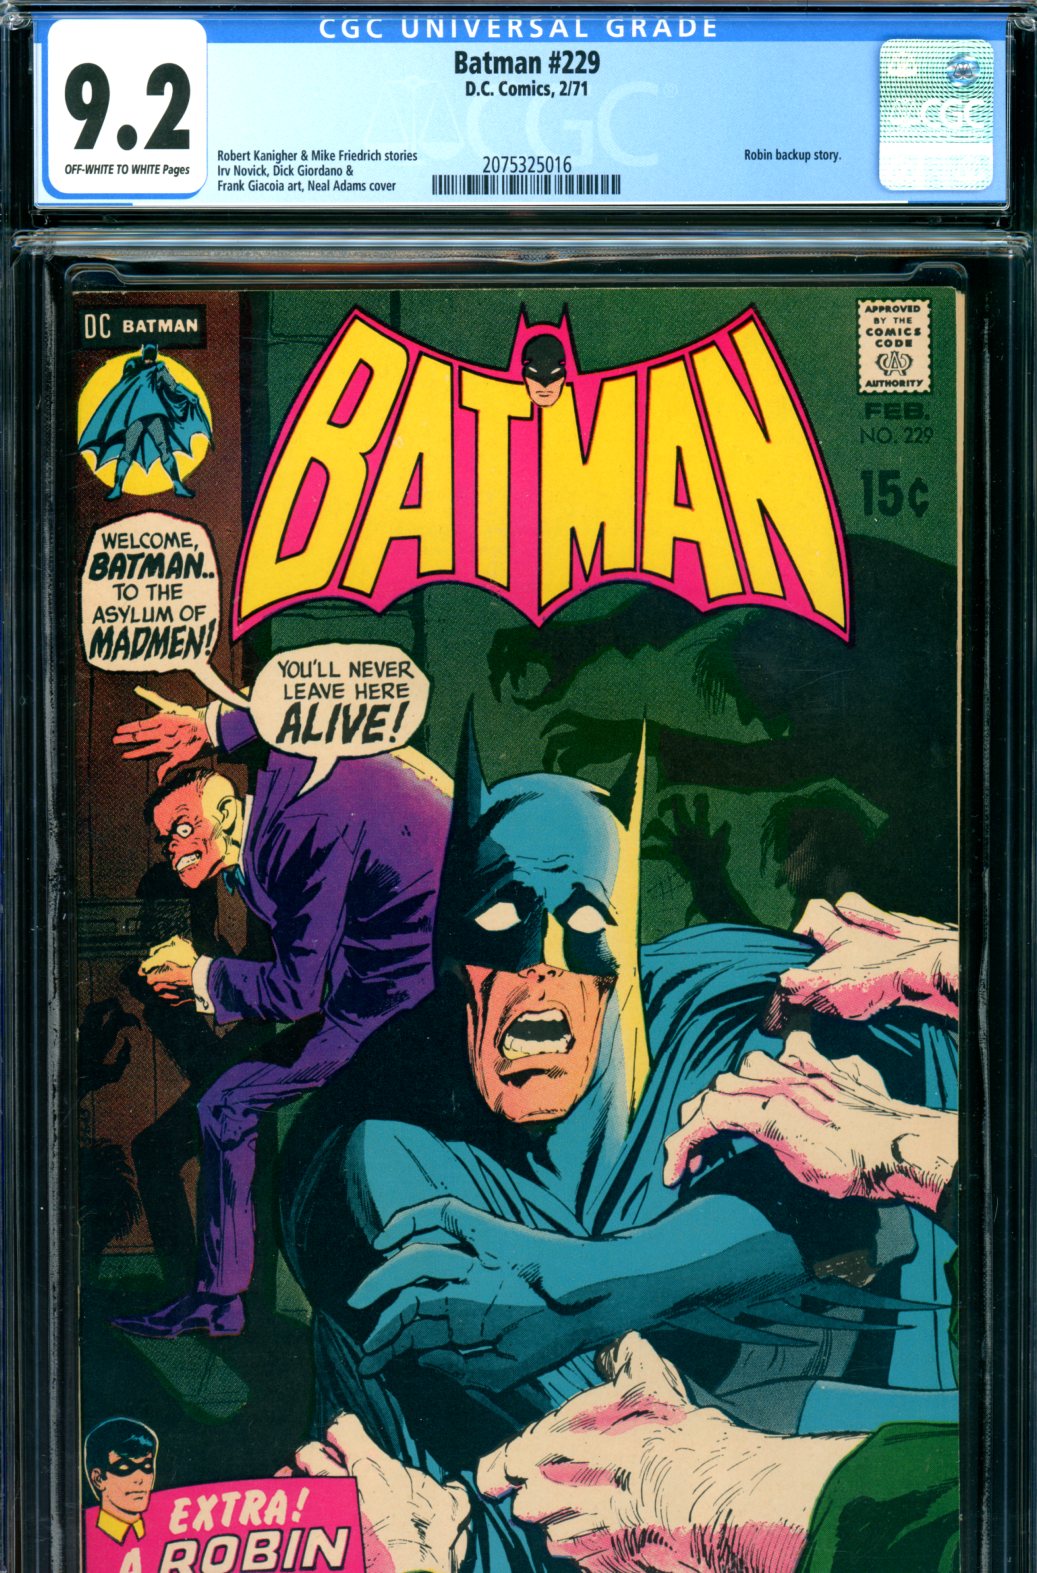 Cedar Chest Comics - Batman #229 CGC graded  - Neal Adams cover - SOLD!